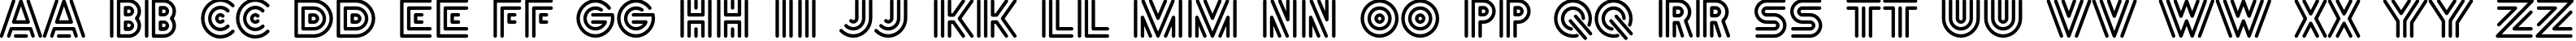 Пример написания английского алфавита шрифтом Neonic